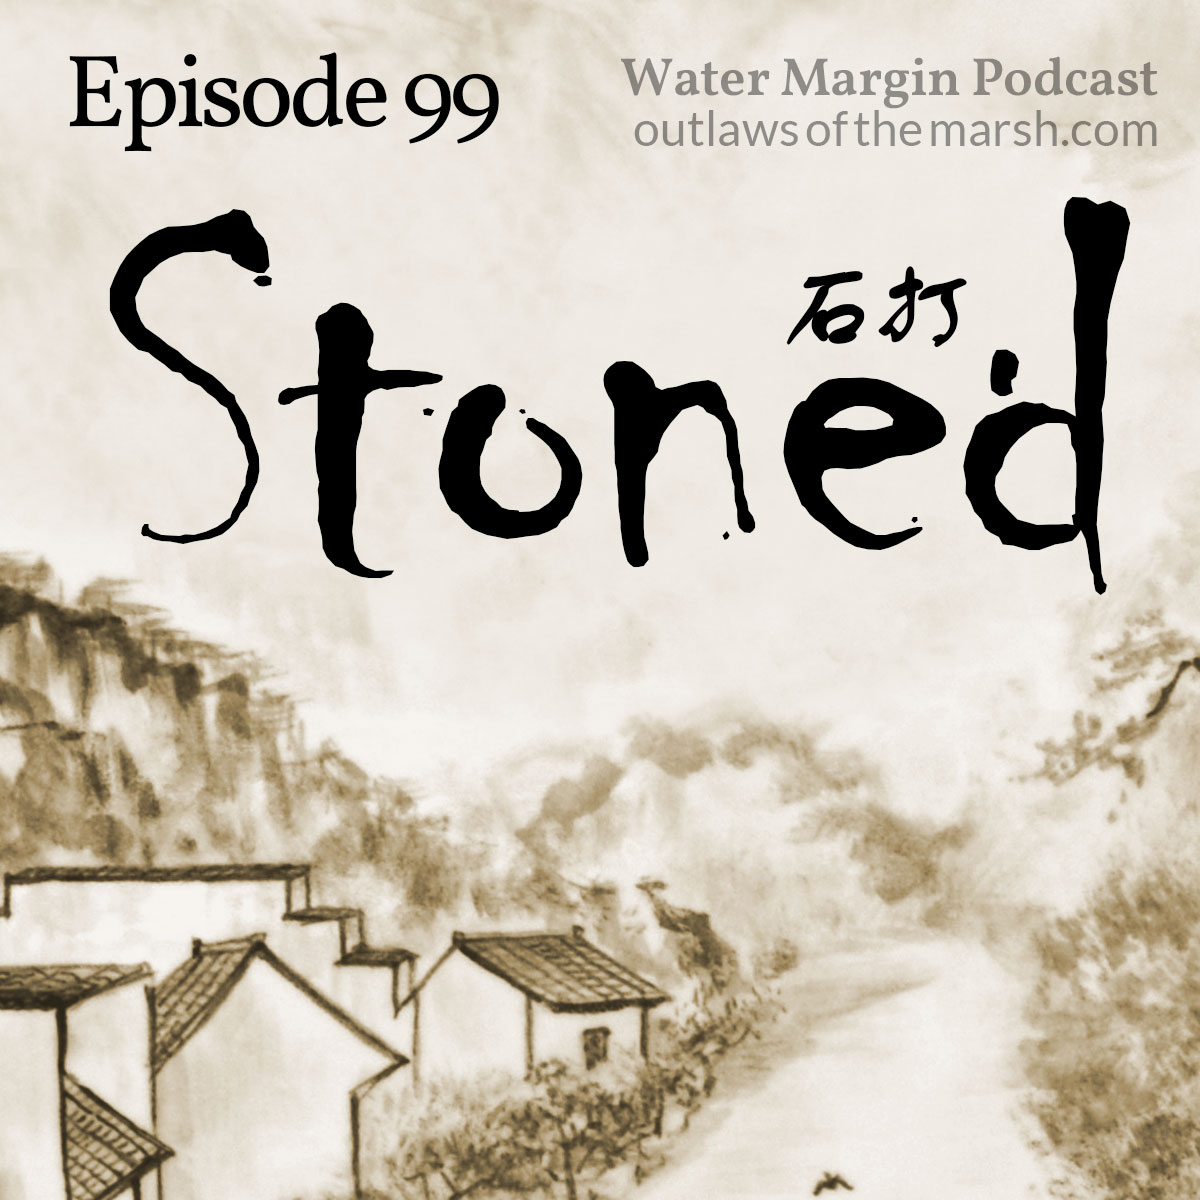 Water Margin Podcast: Episode 099